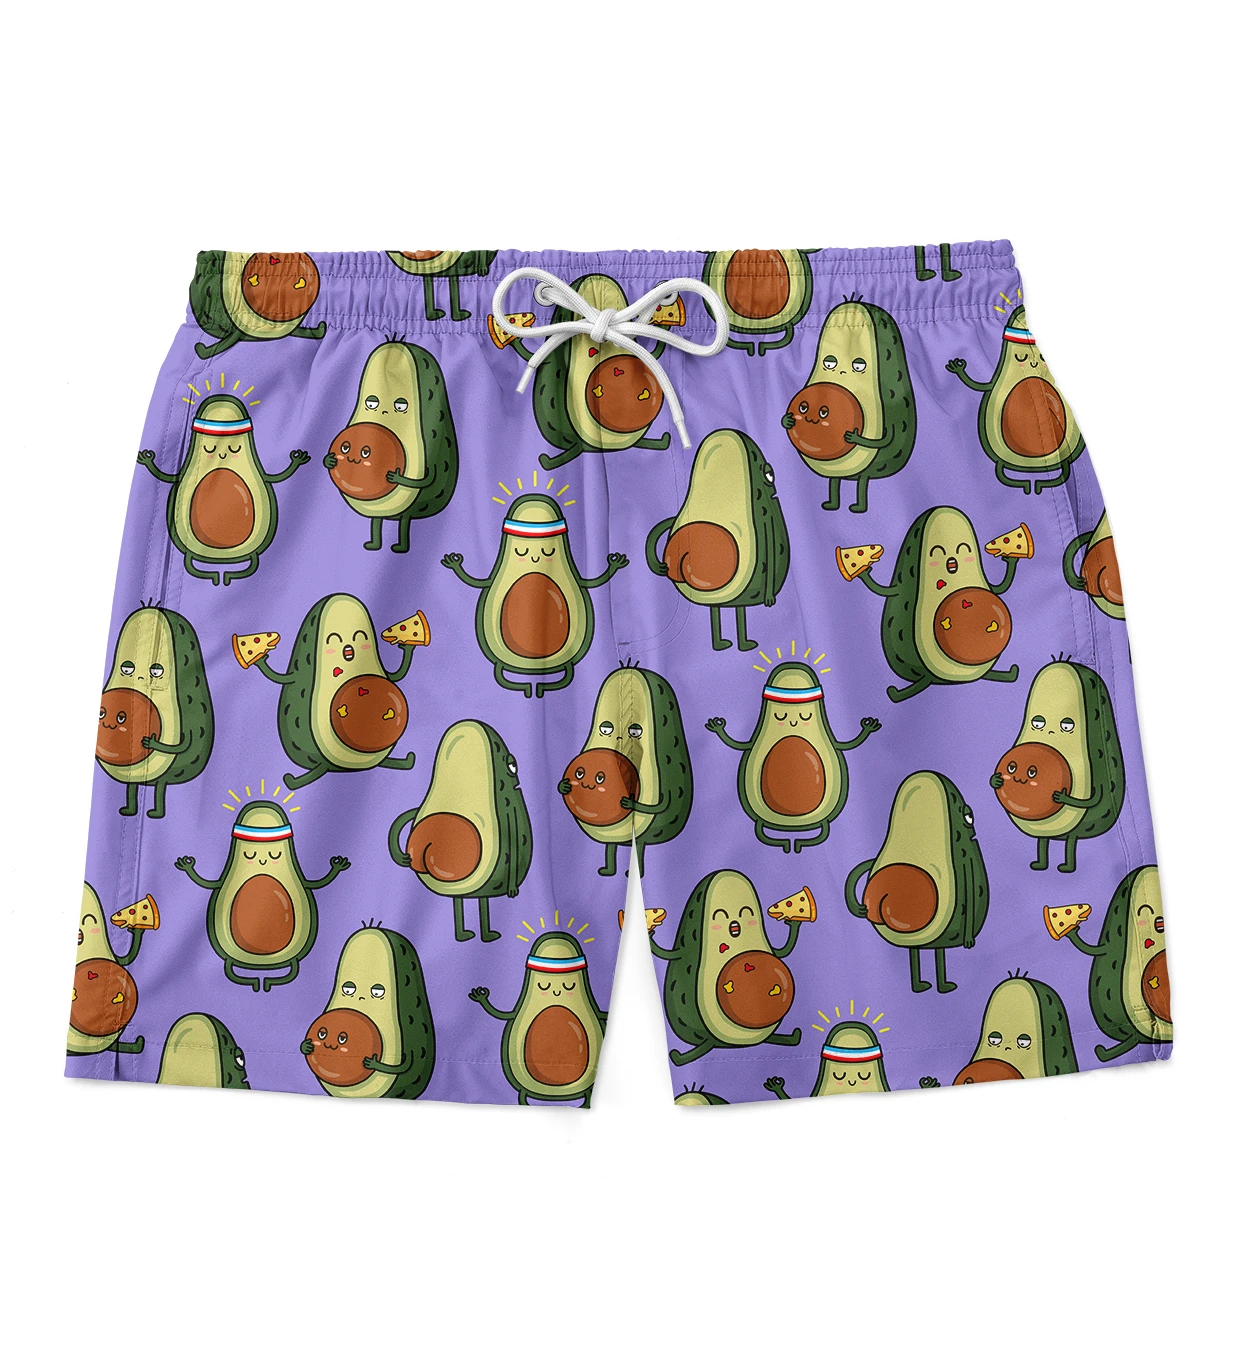 Avocado purple swim shorts - Mr. Gugu & Miss Go